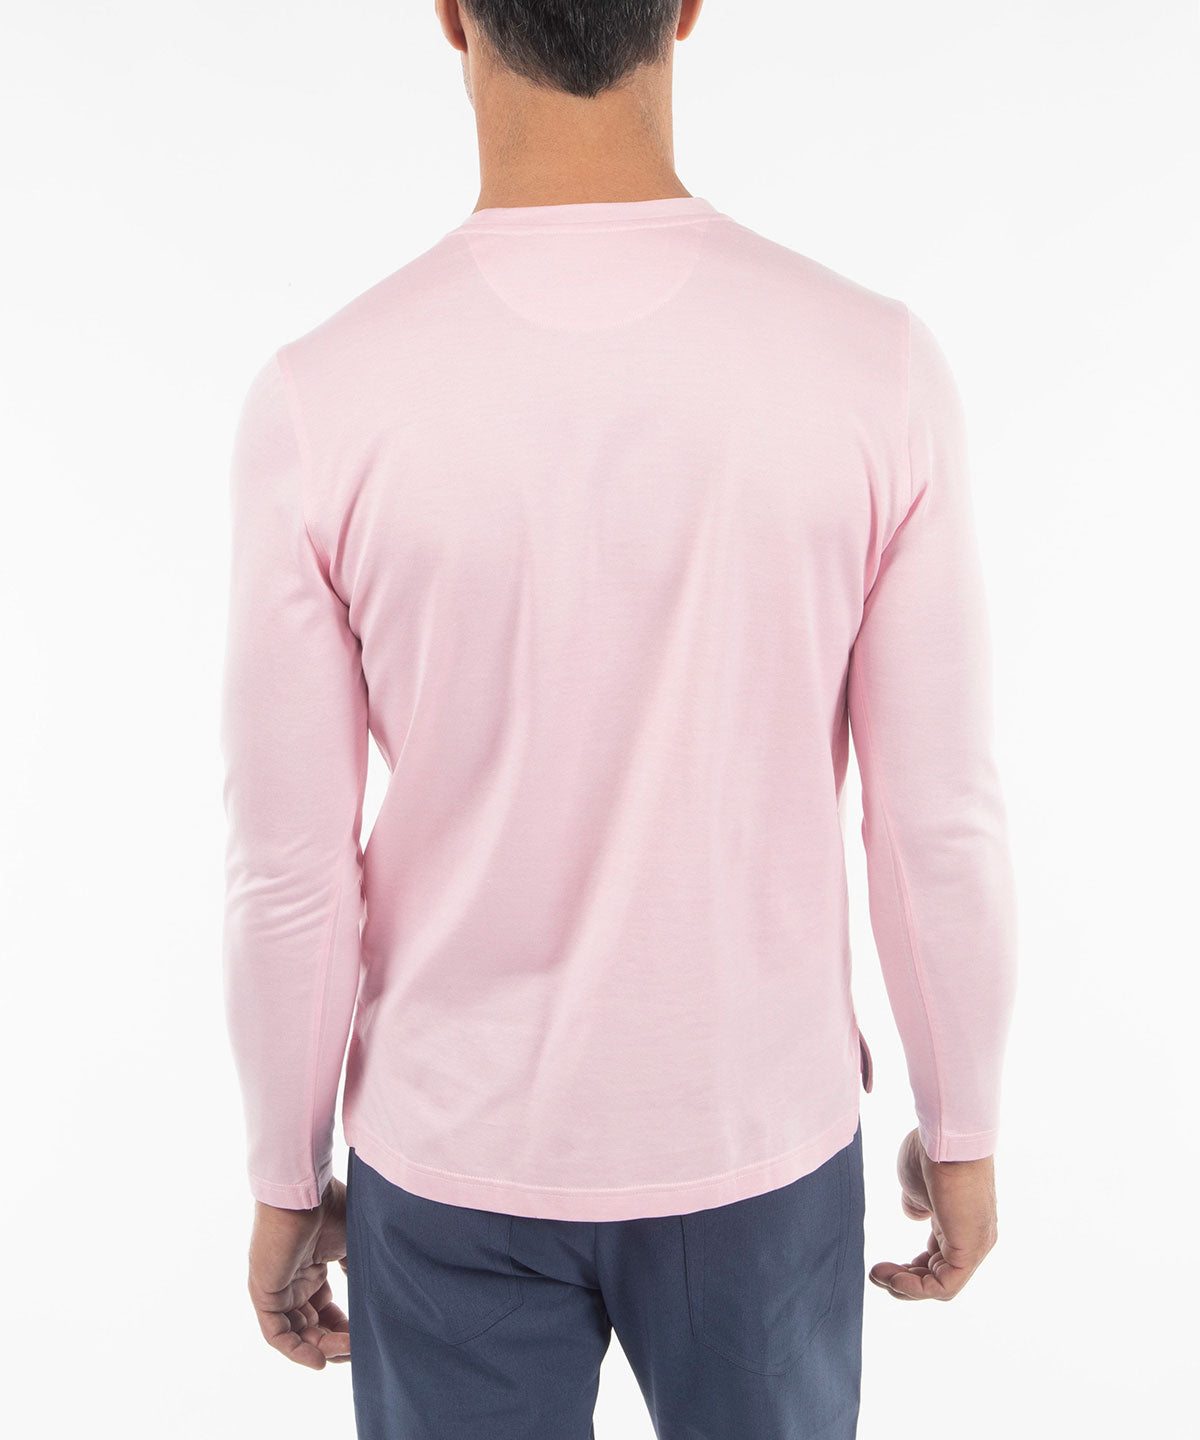 Basic Hot Pink Crew Neckline Long Sleeves Cotton T-Shirt